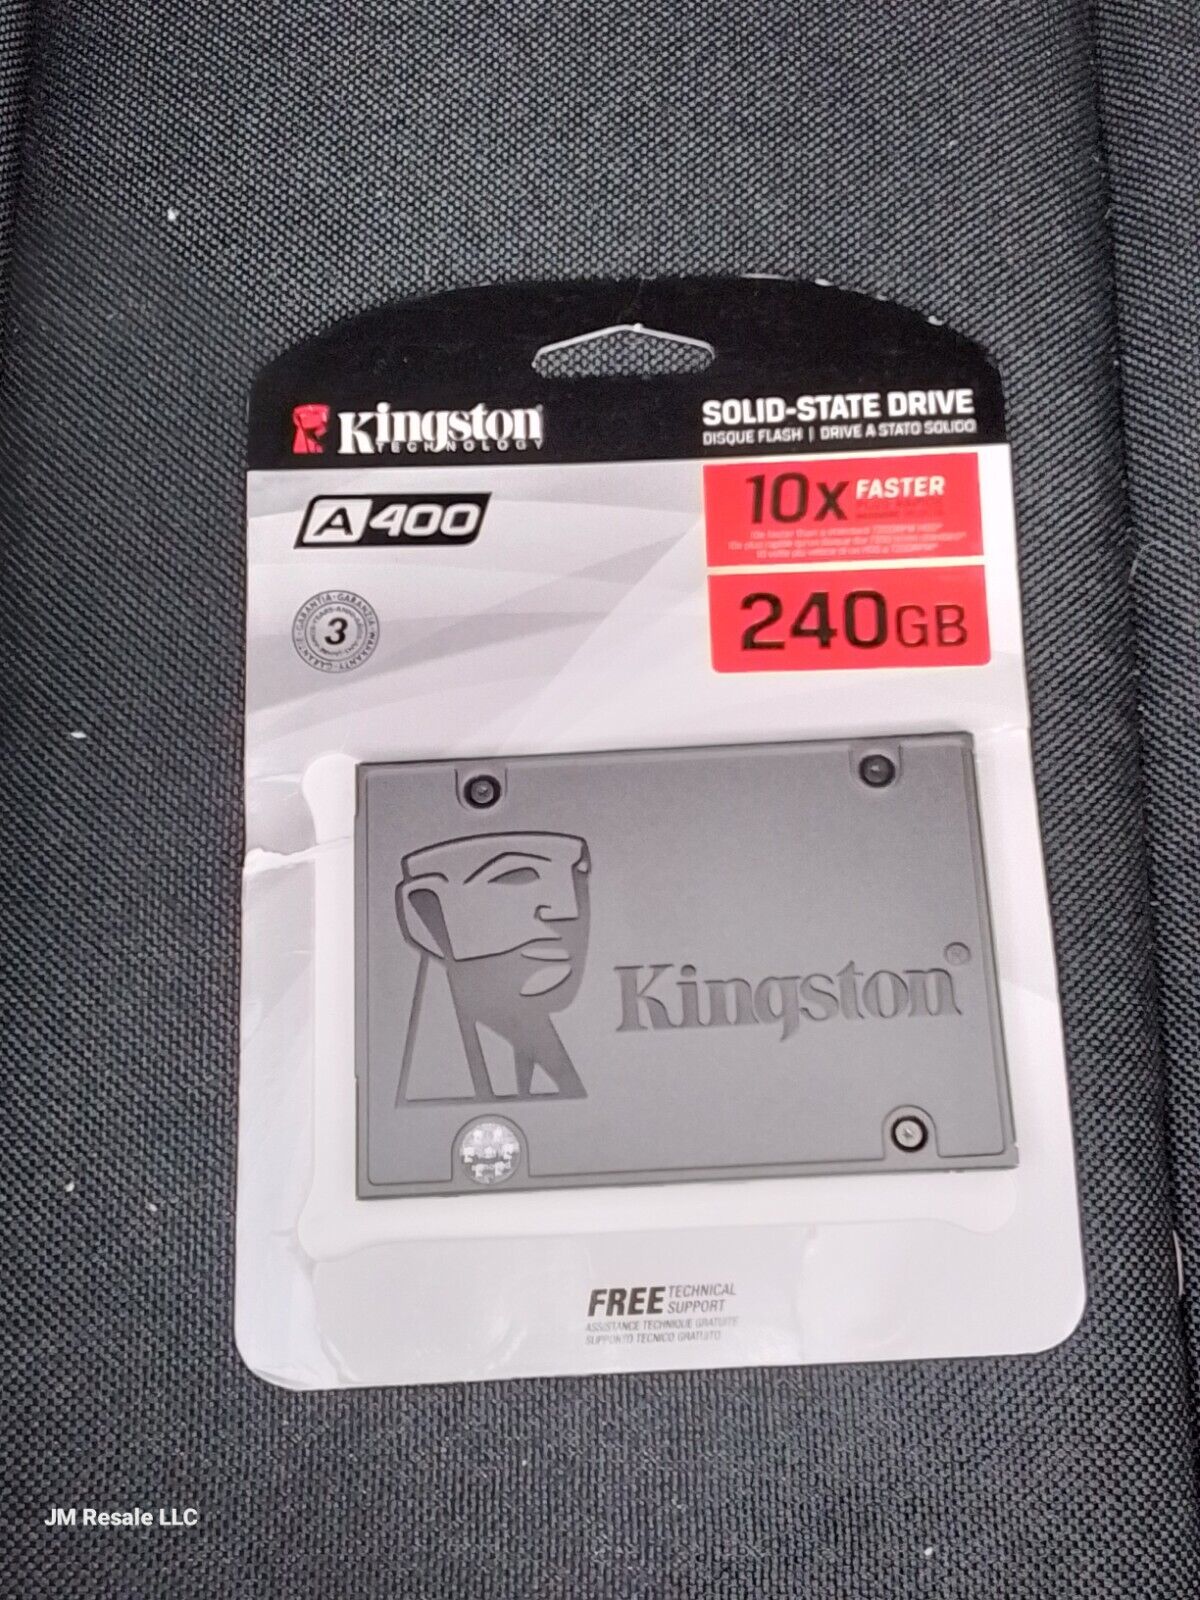 Kingston SSD 240GB SATA III 2.5” Internal Solid State Drive Notebook Desktop